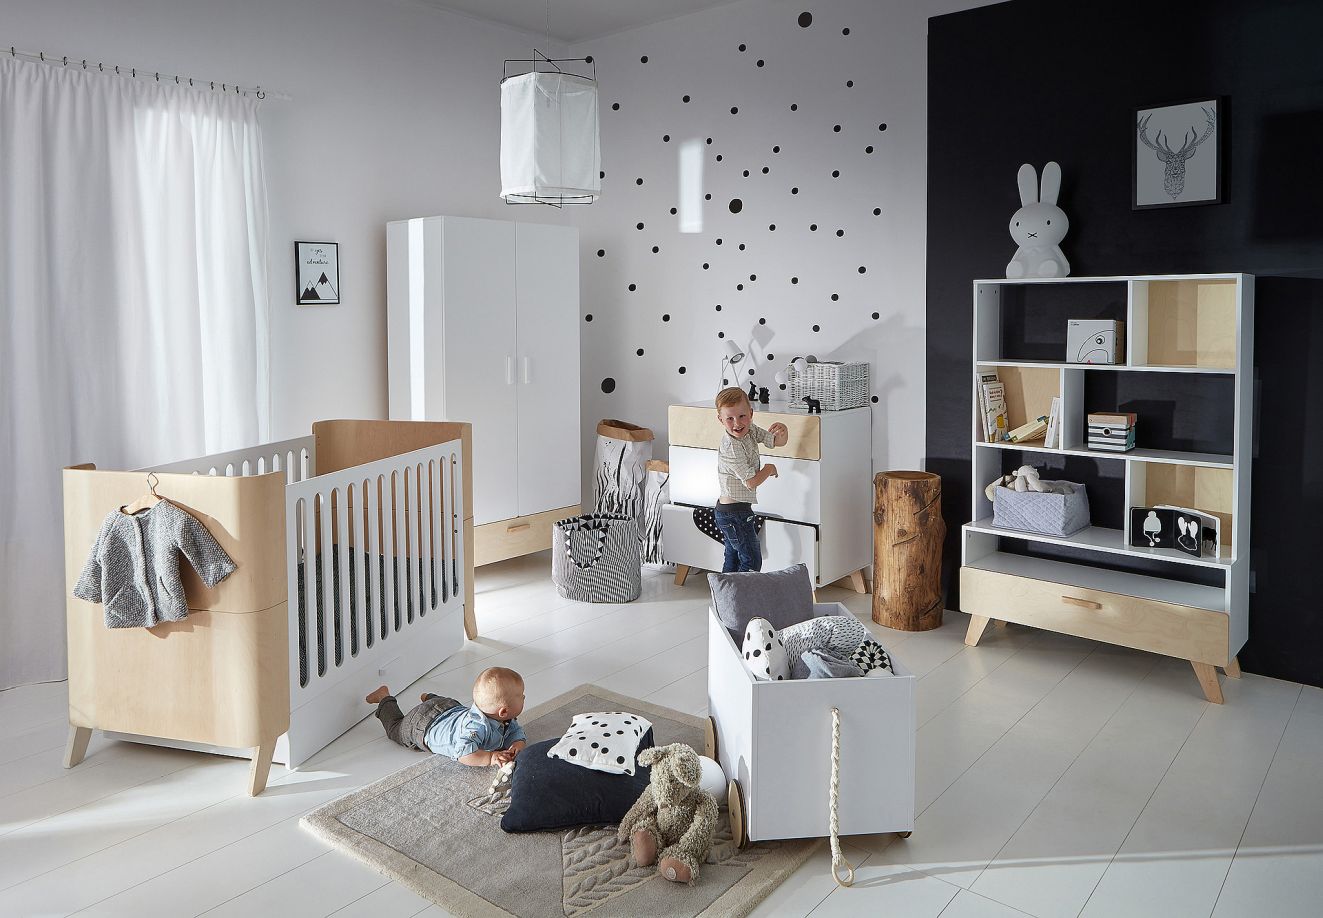 Babyzimmer Set Hoppa: Babybett 70x140, Kleiderschrank, Kommode, Regal